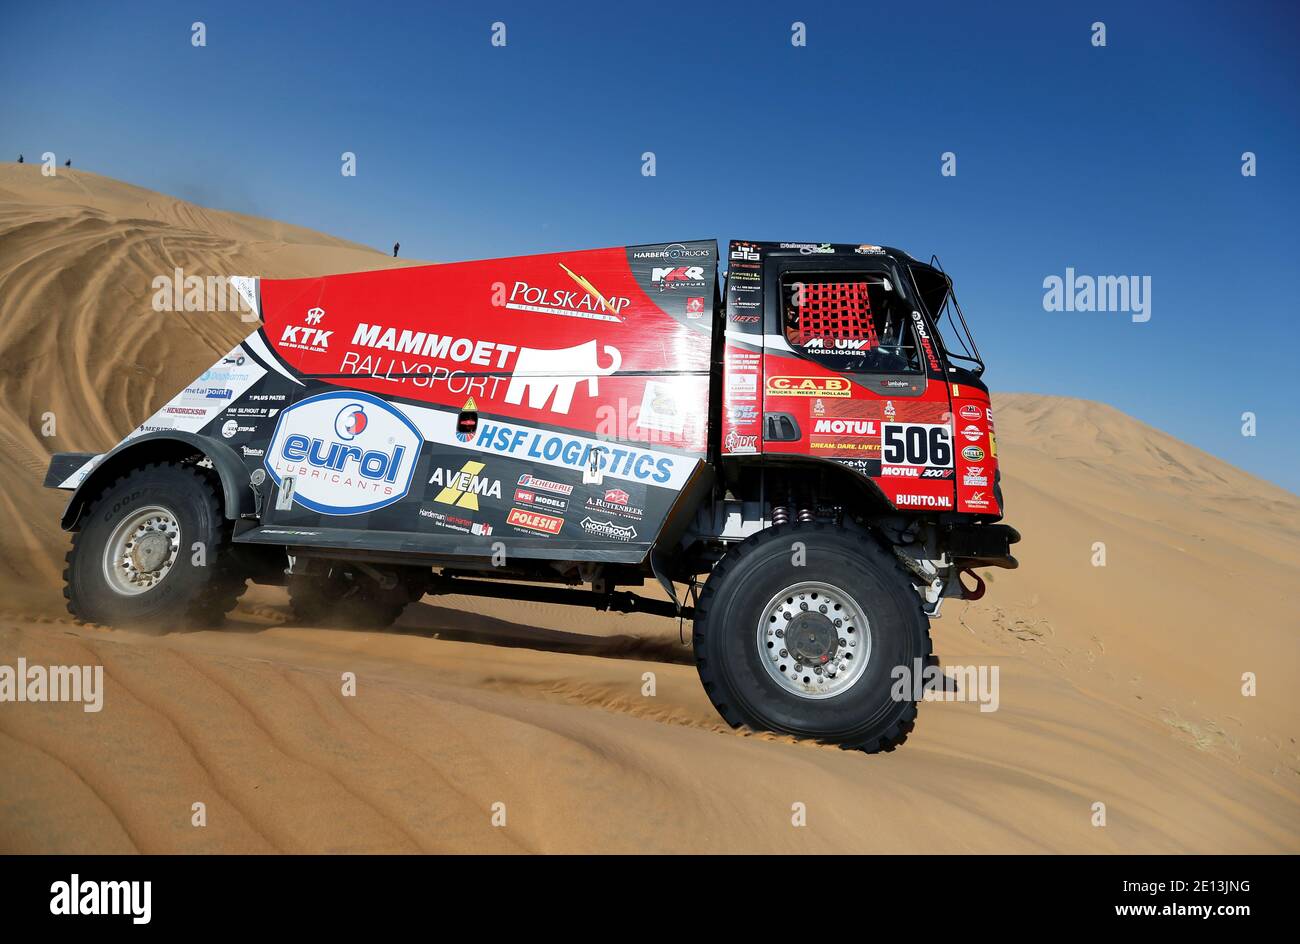 Rallying - Dakar Rally - Stage 2 - Bisha to Wadi ad-Dawasir - Bisha, Saudi  Arabia - January 4, 2021 Mammoet Rallysport's Martin Van Den Brink and  Co-Driver Wouter De Graaff in